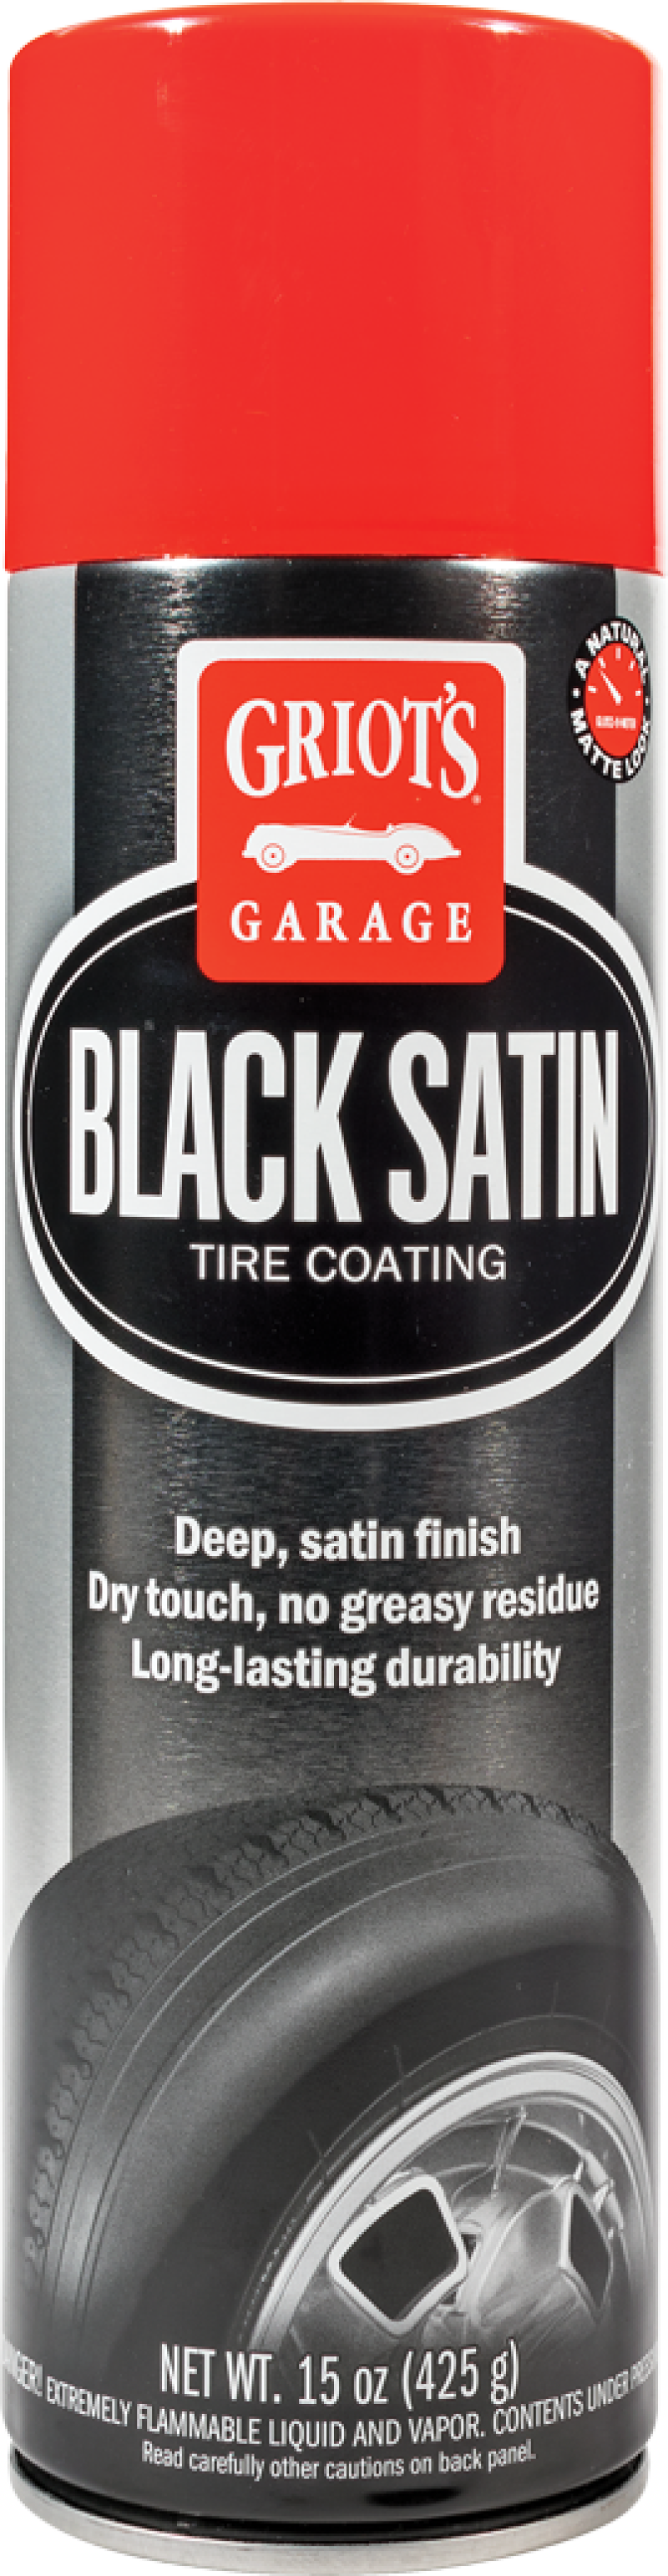 Griots Garage Black Satin Tire Coating 14 oz